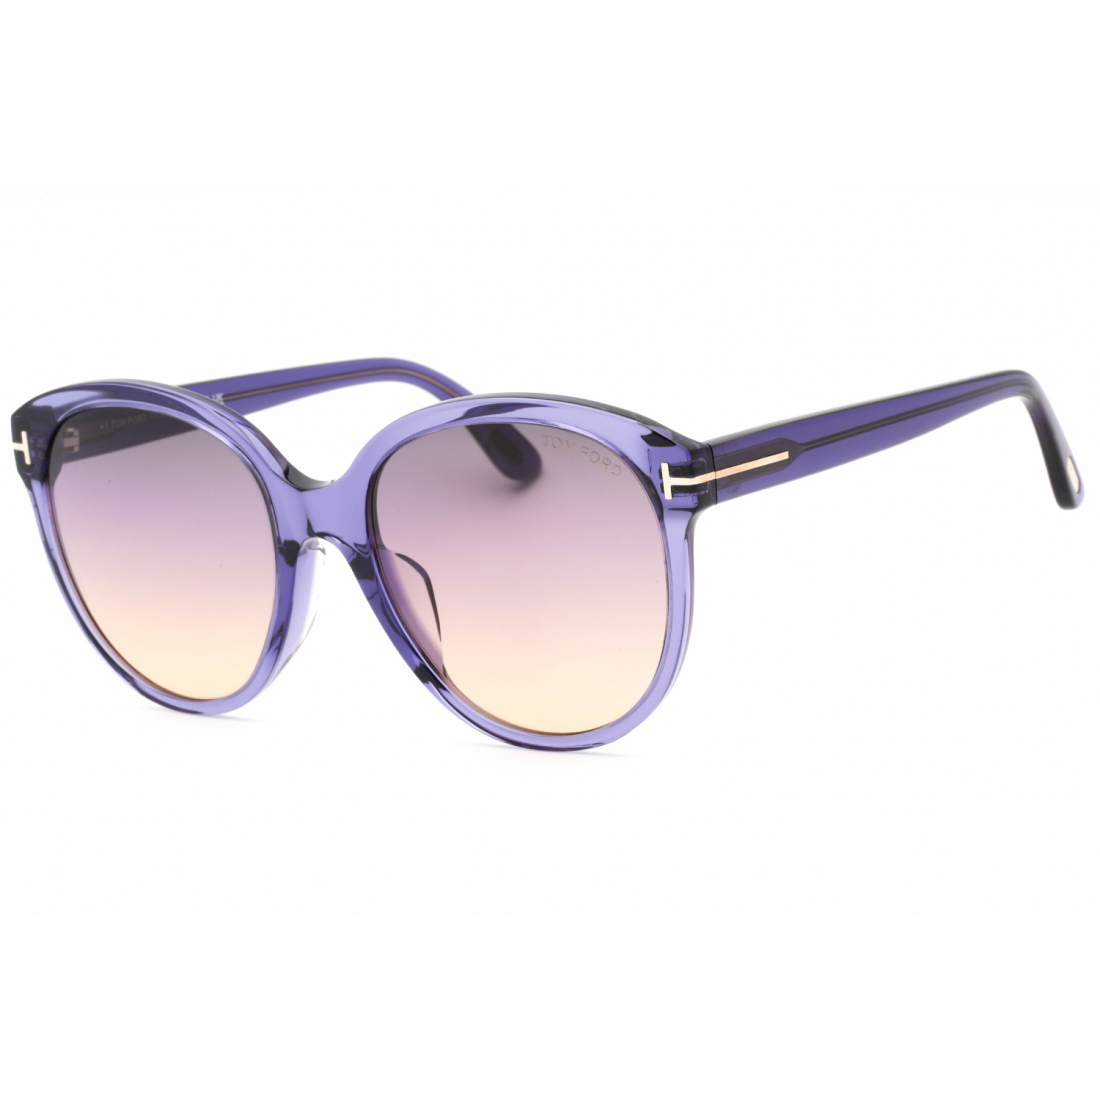 Women's 'FT0957-D' Sunglasses